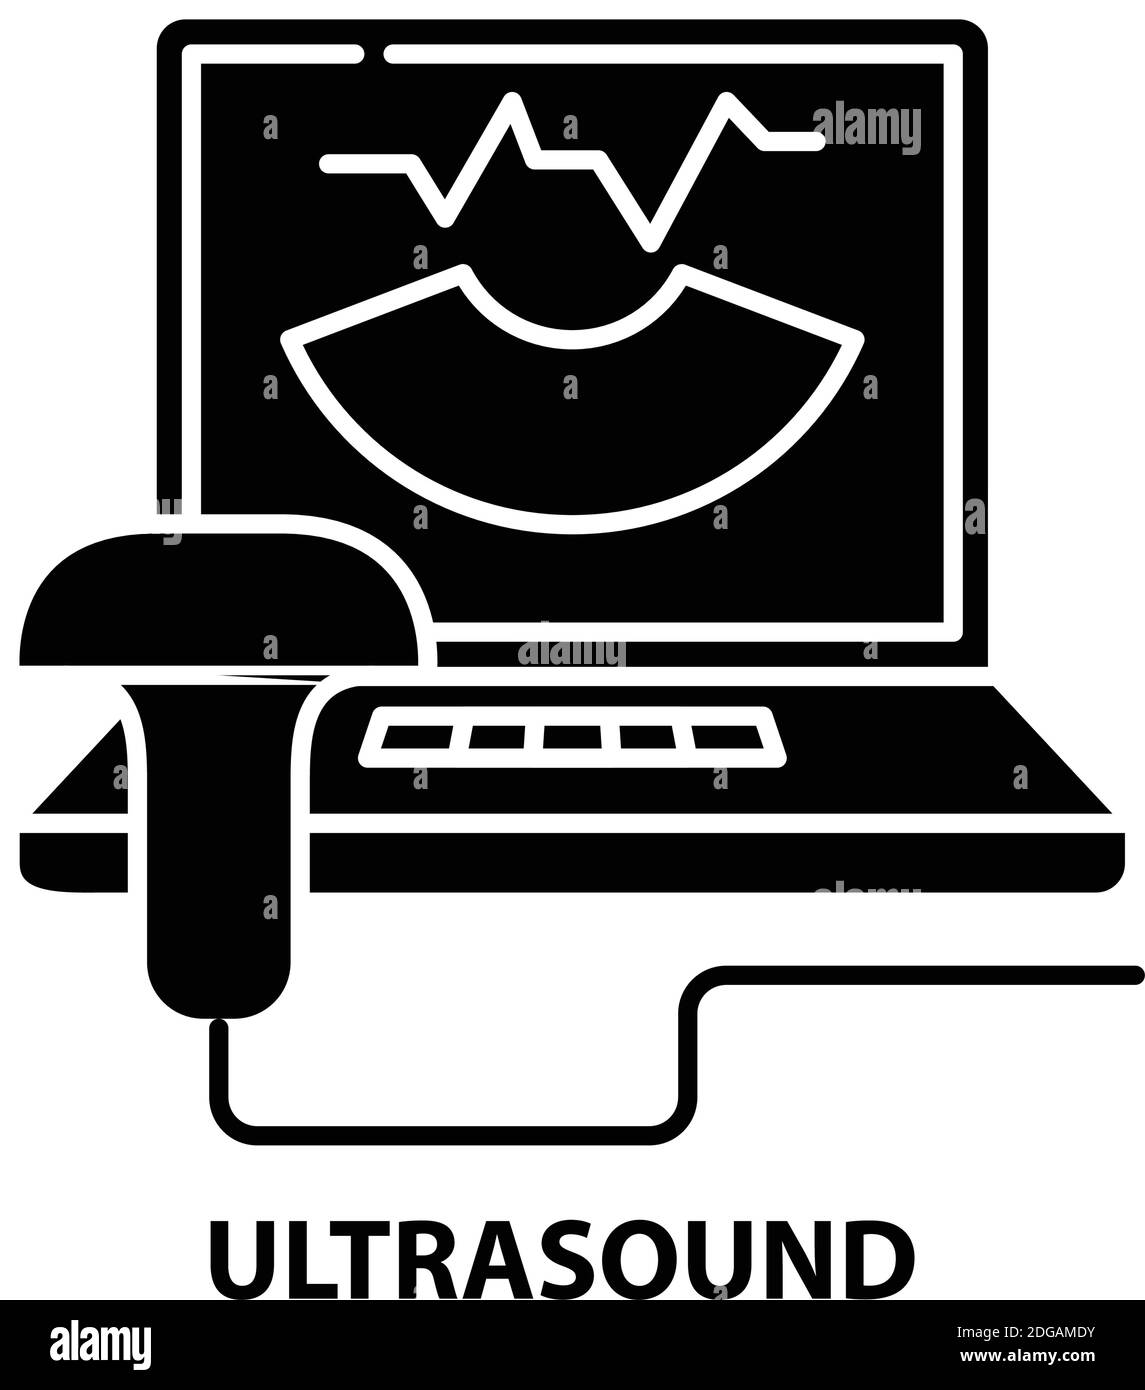 ultrasound icon, black vector sign with editable strokes, concept illustration Stock Vector